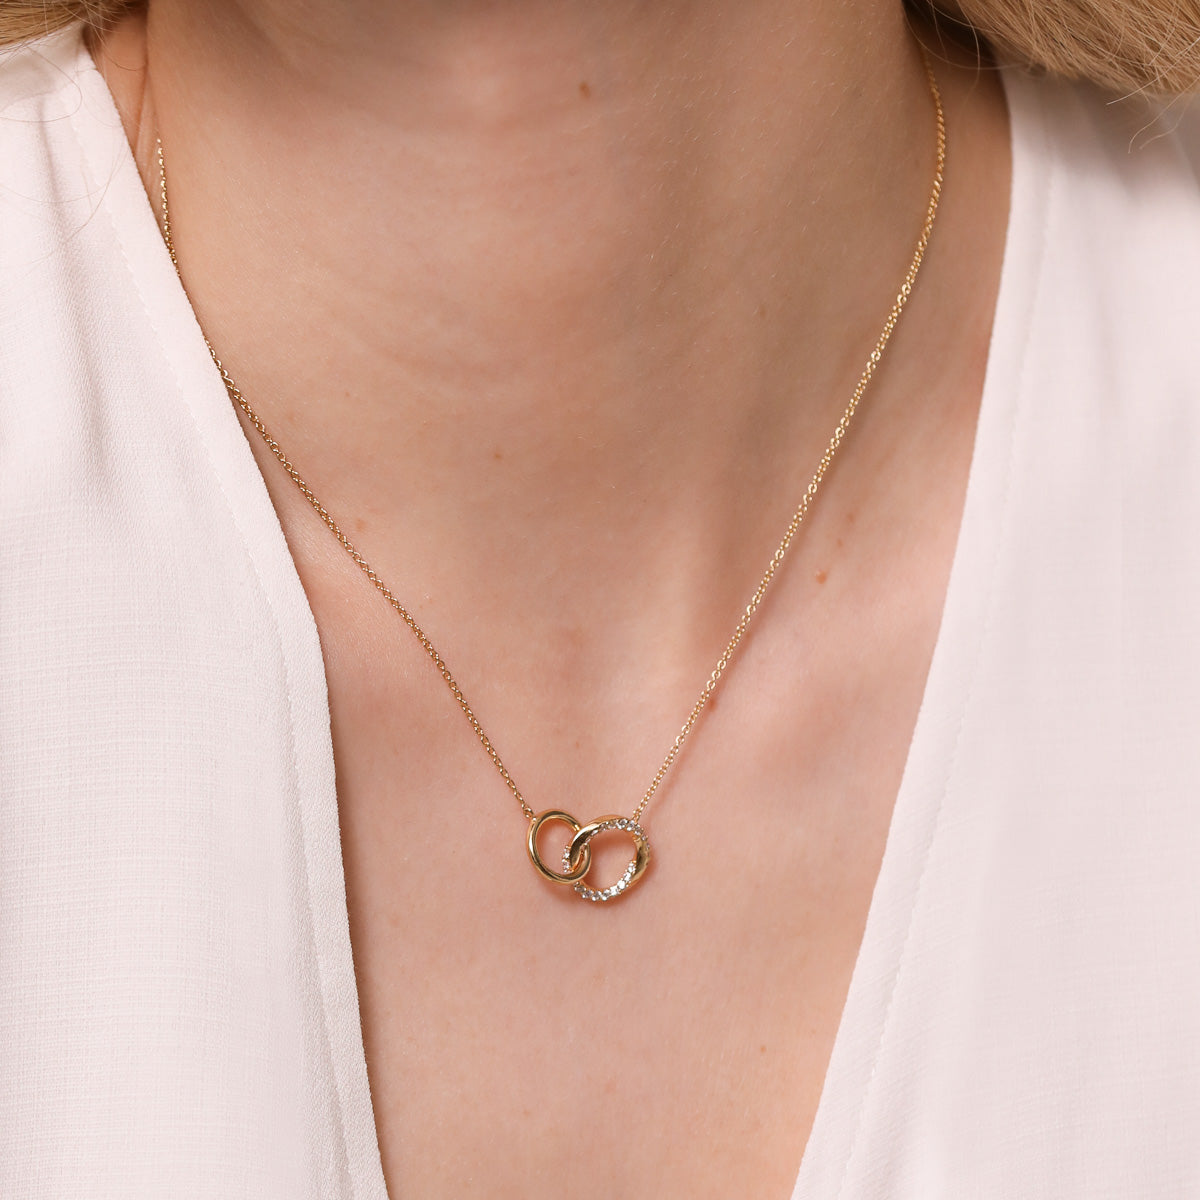 NL(ニール) Orbit silver925 chain necklace - アクセサリー